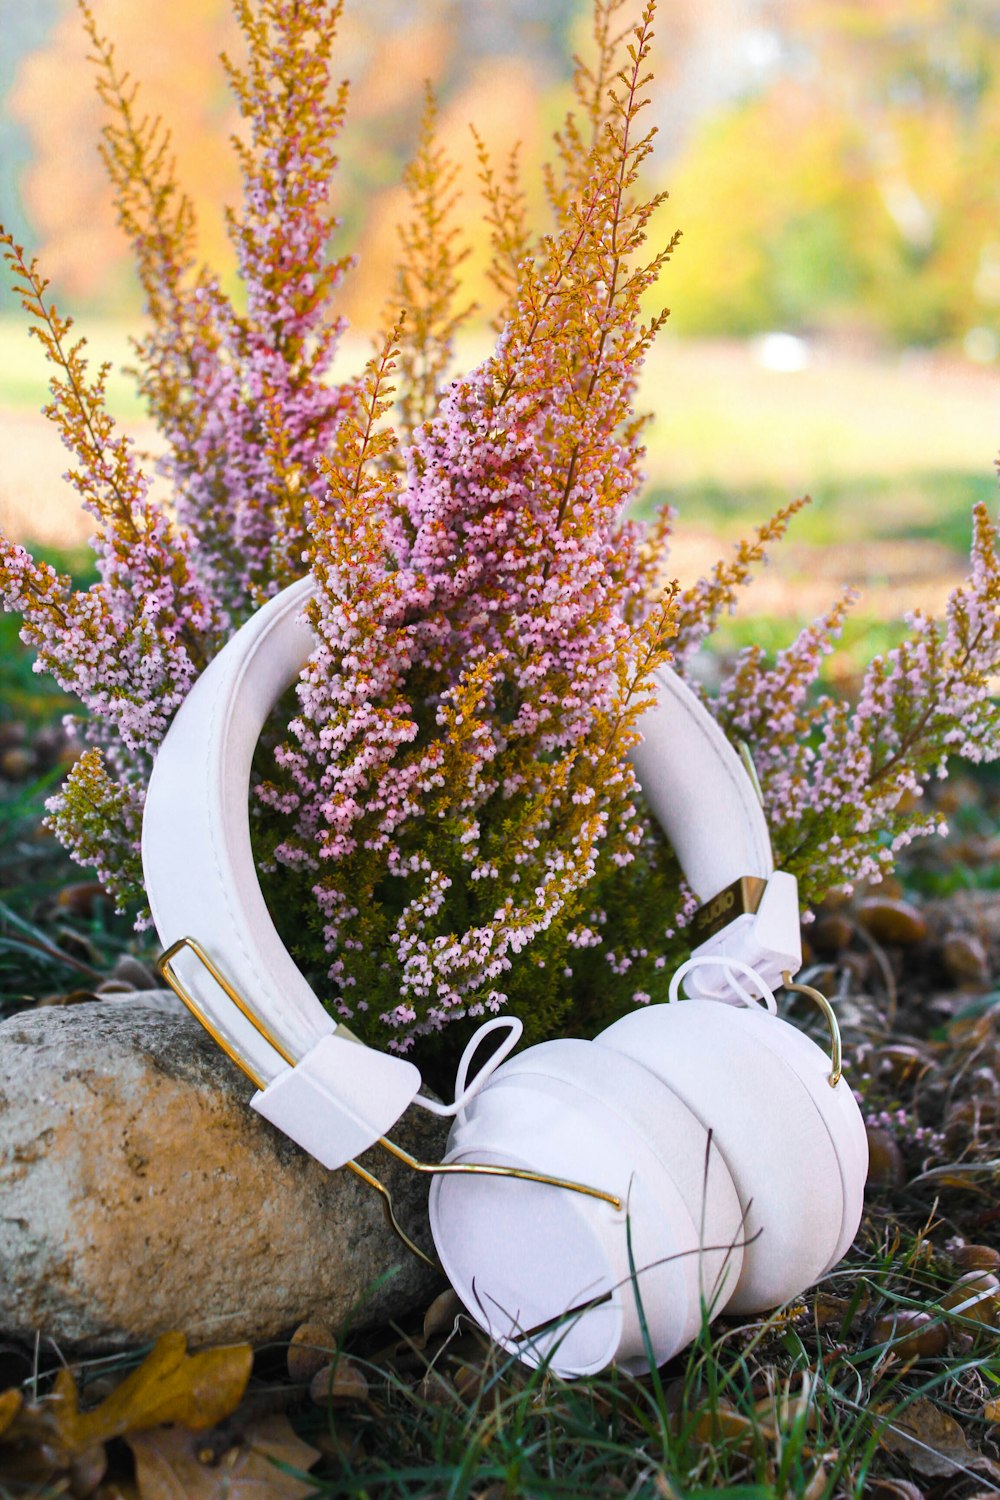 white cordless headphones near plant during daytime